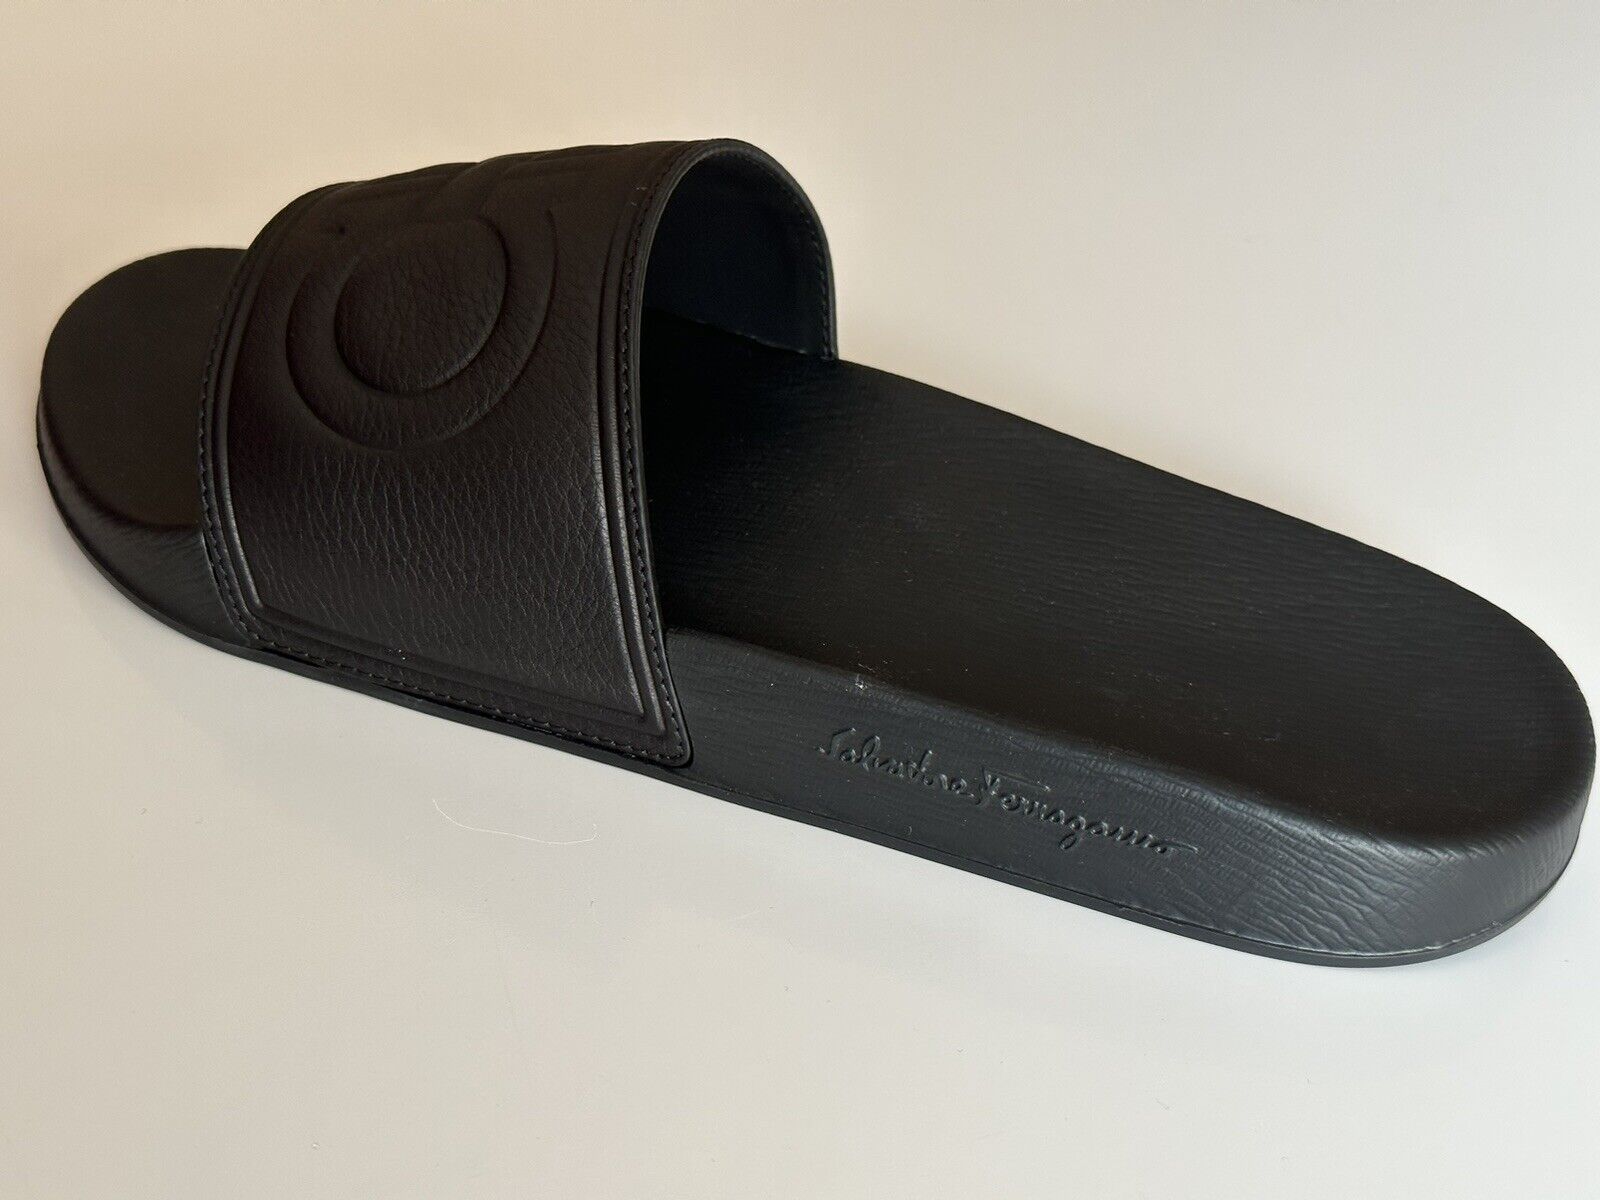 NIB $330 Salvatore Ferragamo Men's Rubber Black Sandals LEFT FOOT ONLY 10 US